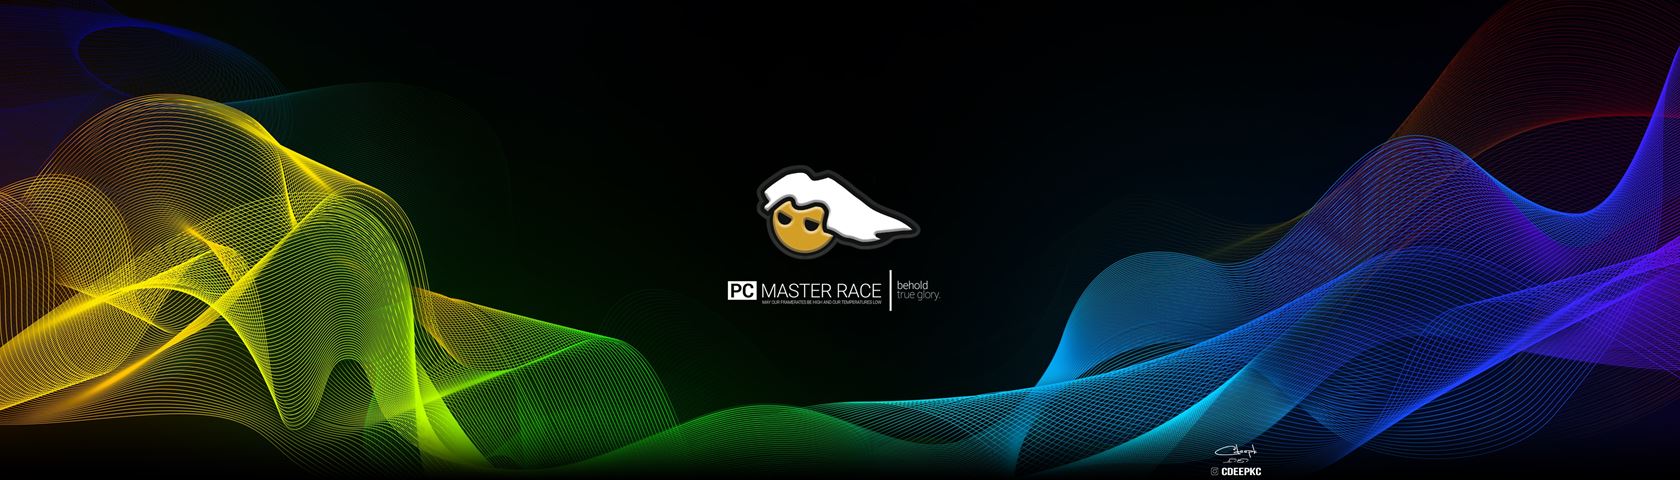 Project Pc Master Race - 3 Monitor Hd Wallpaper Razer - HD Wallpaper 